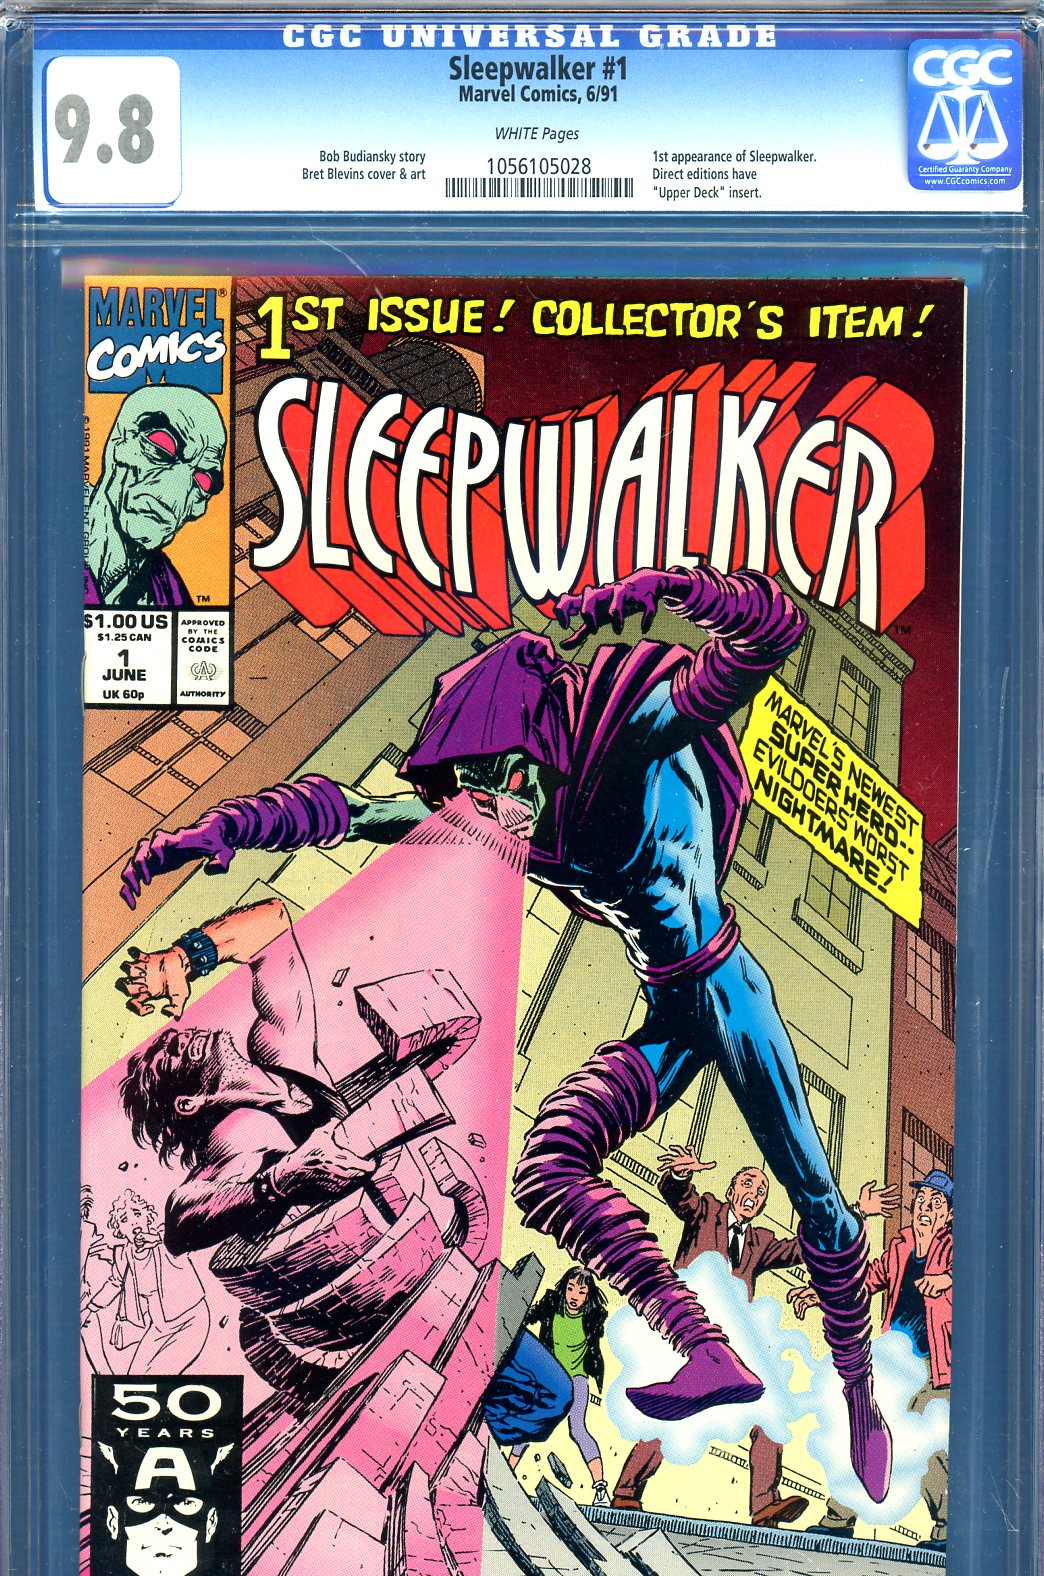 Sleepwalker #1 CGC 9.8 w